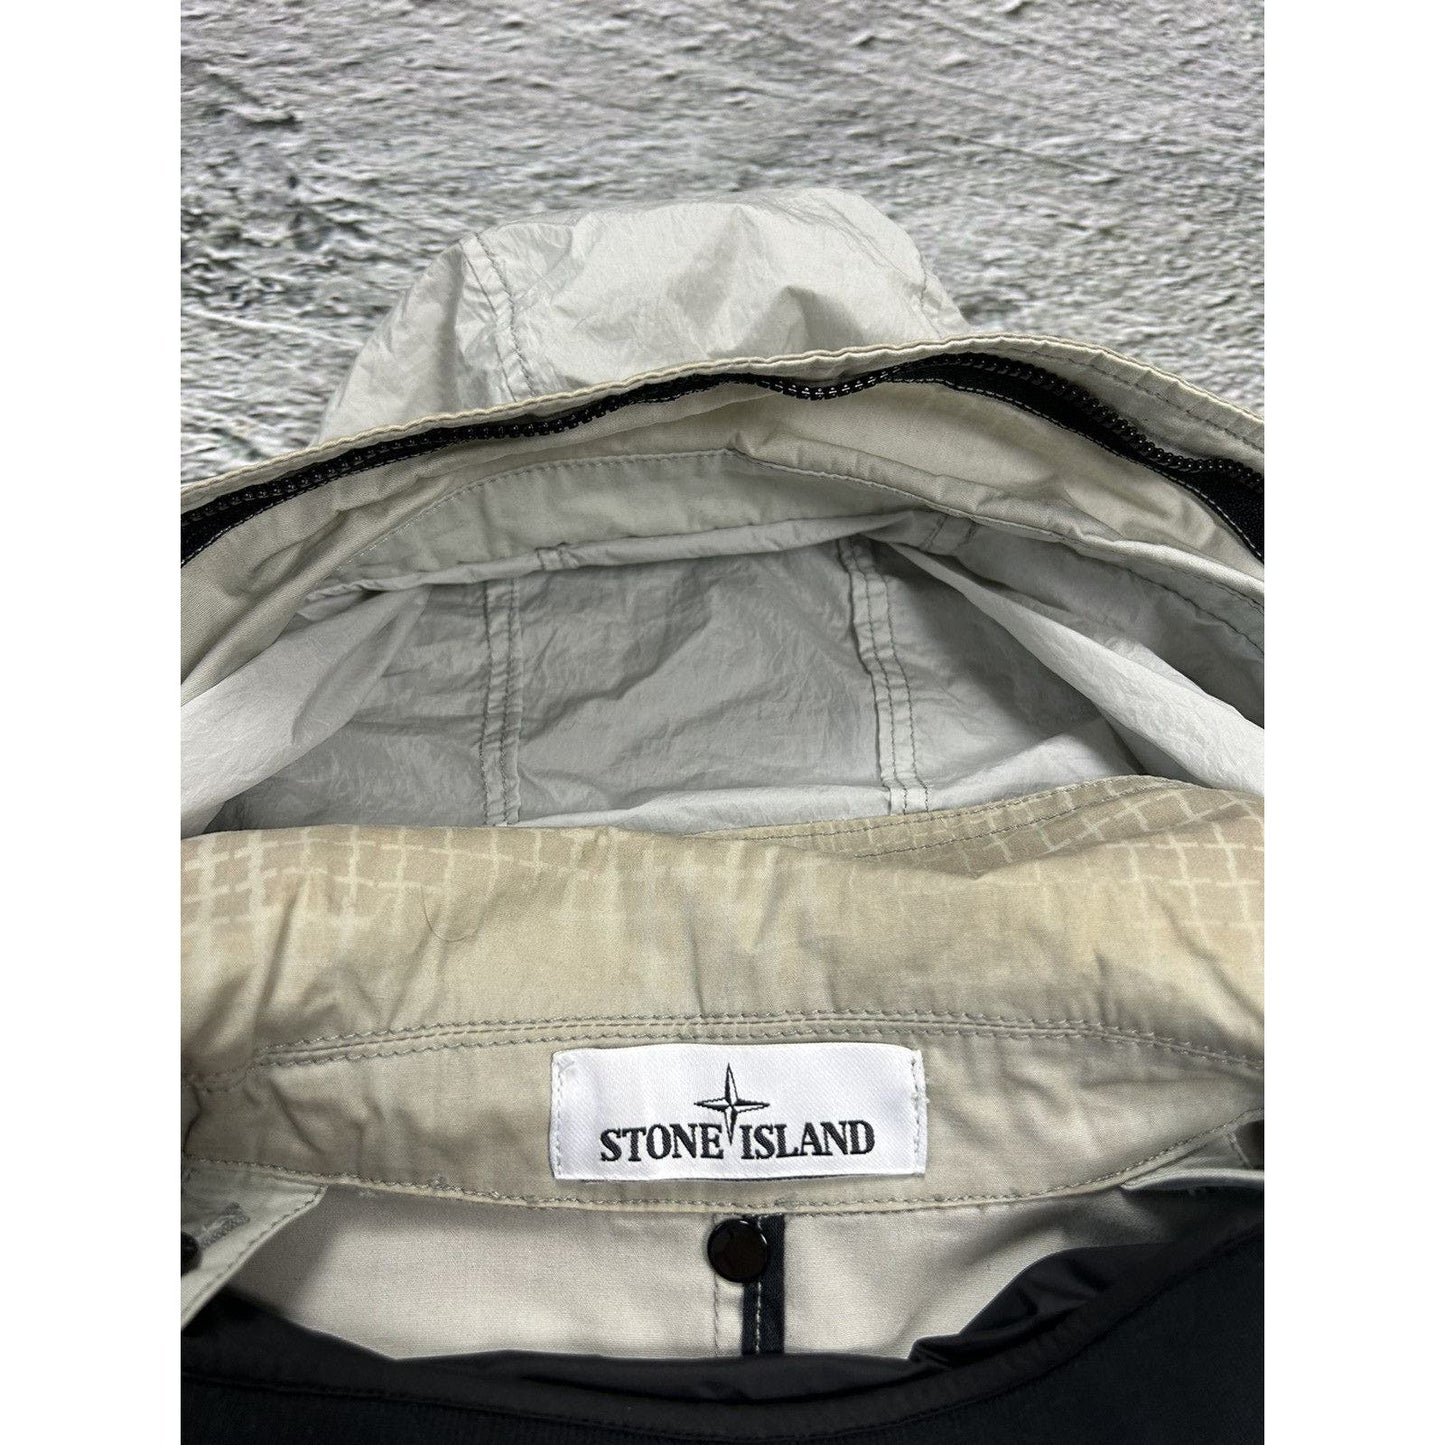 Stone Island Ice Jacket SI Check Grid Camo A/W 2017